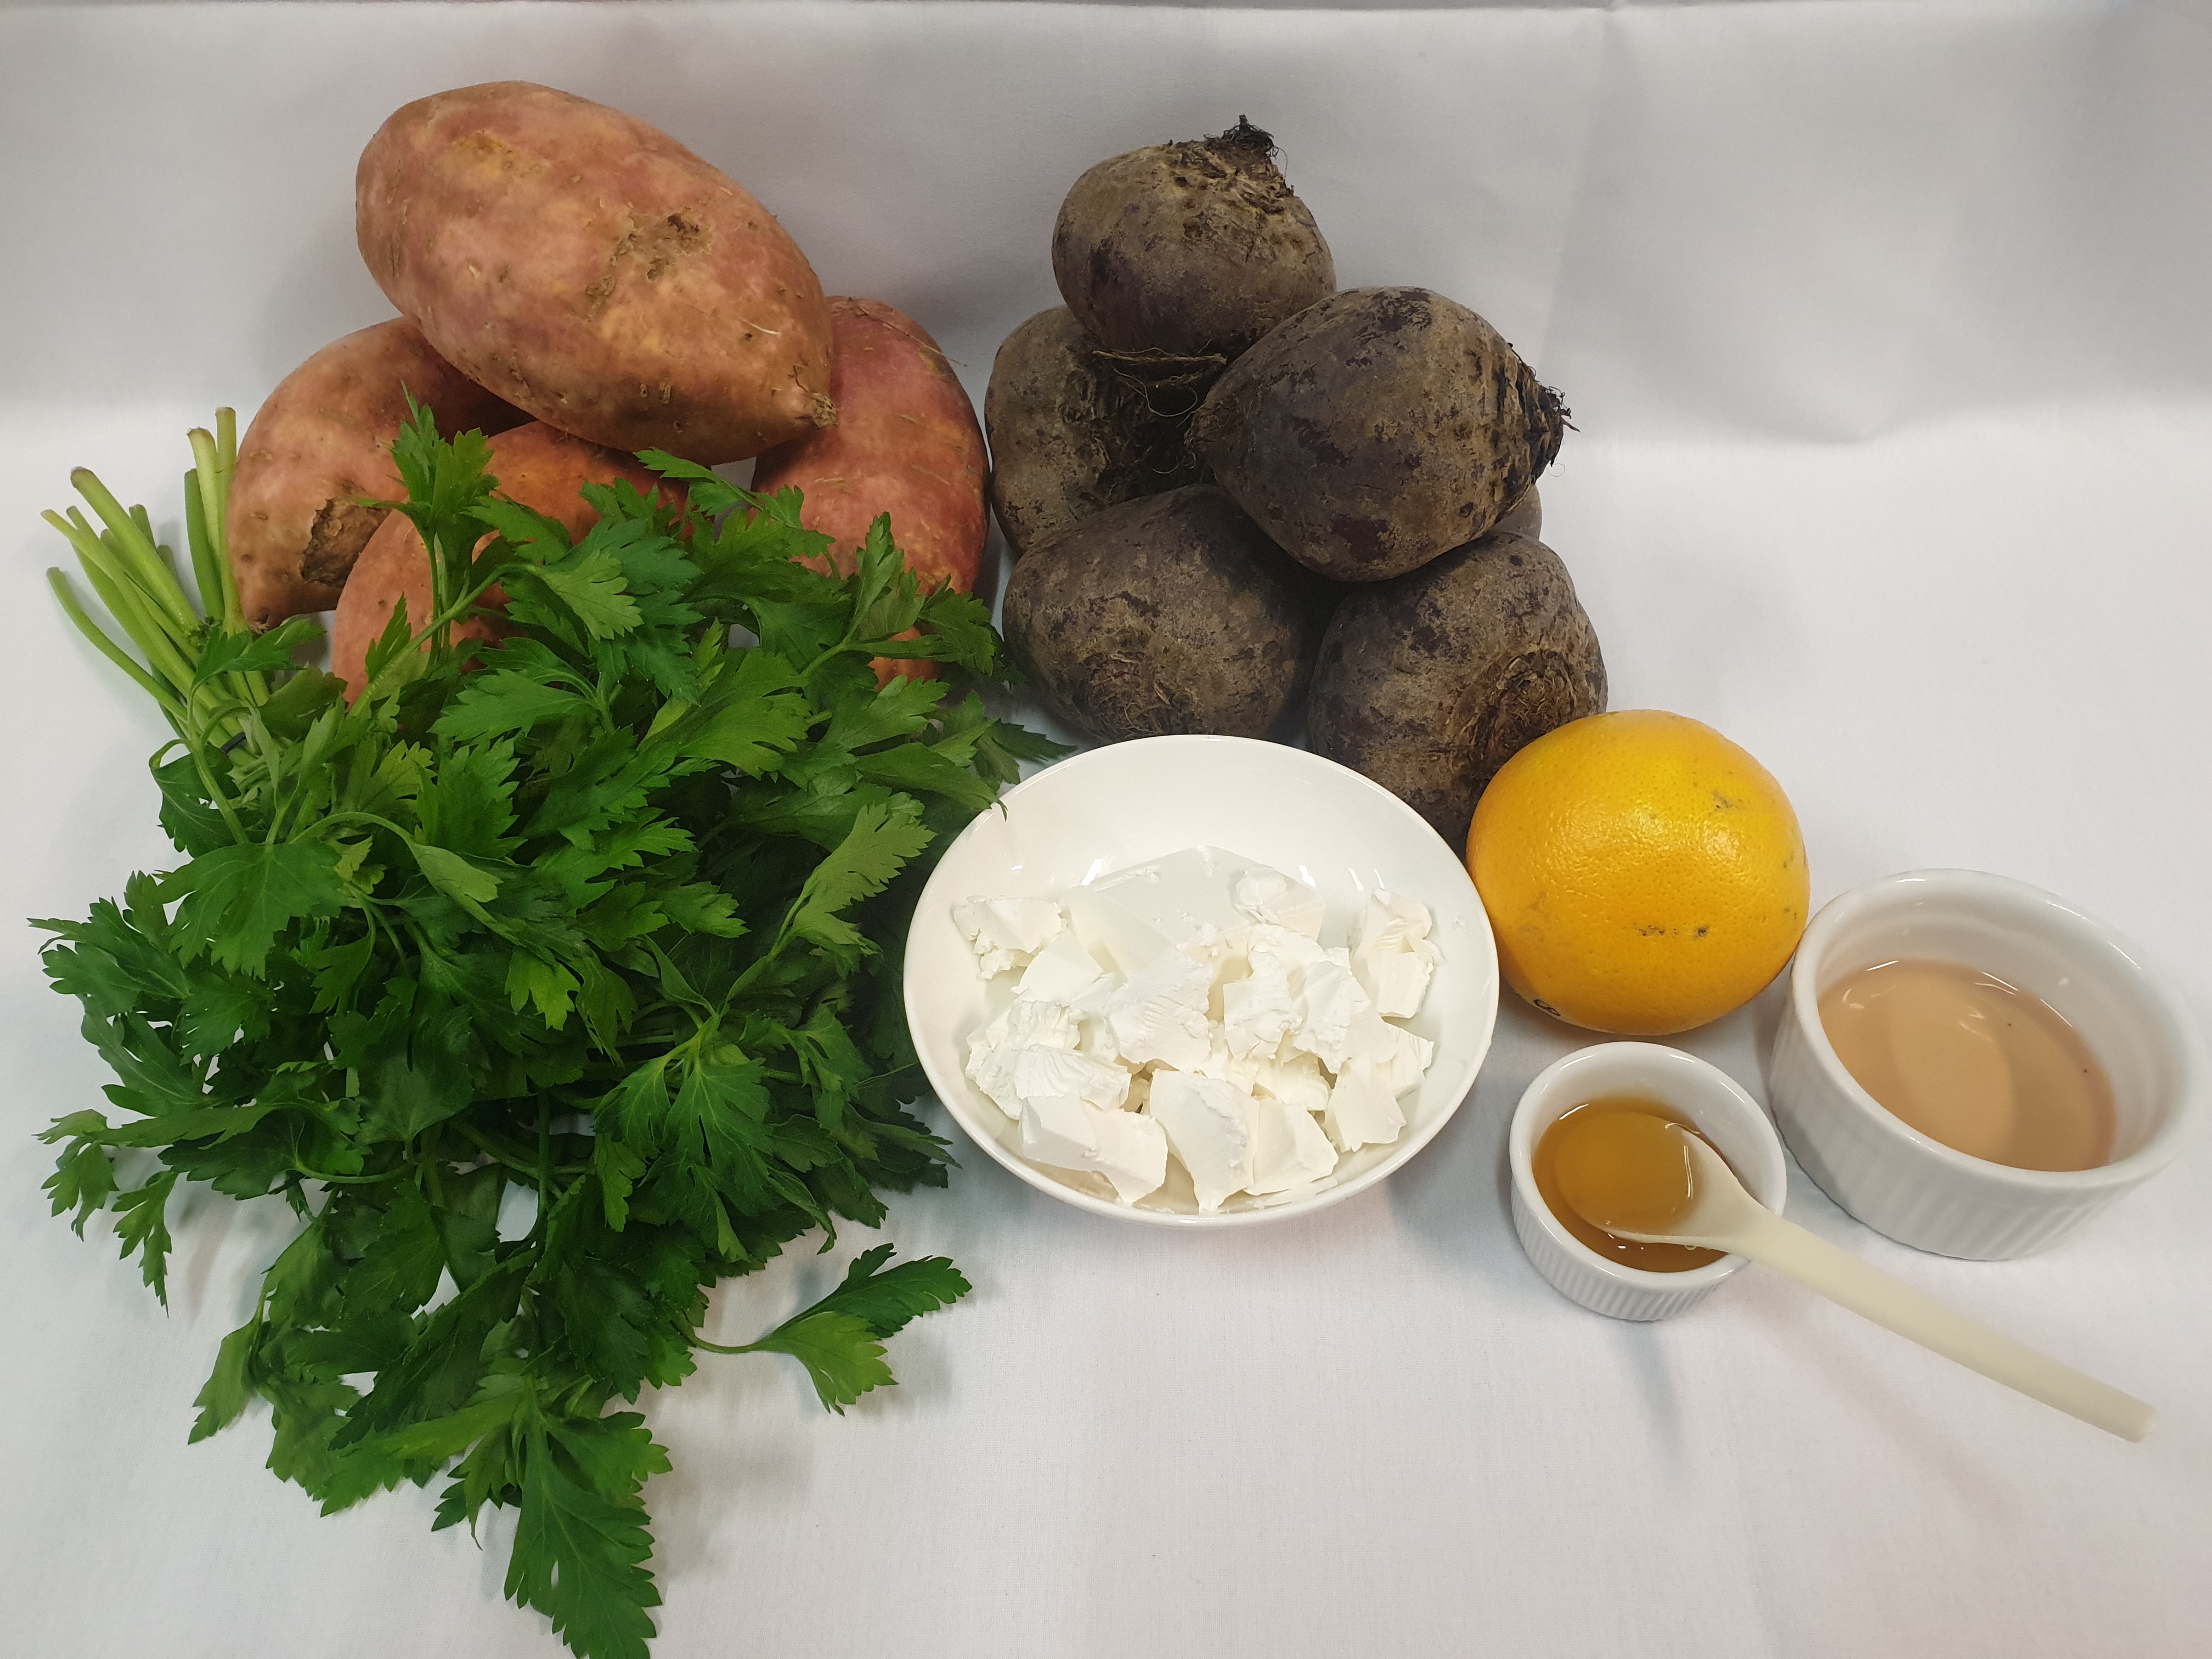 Beetroot and Sweet Potato Salad Ingredients